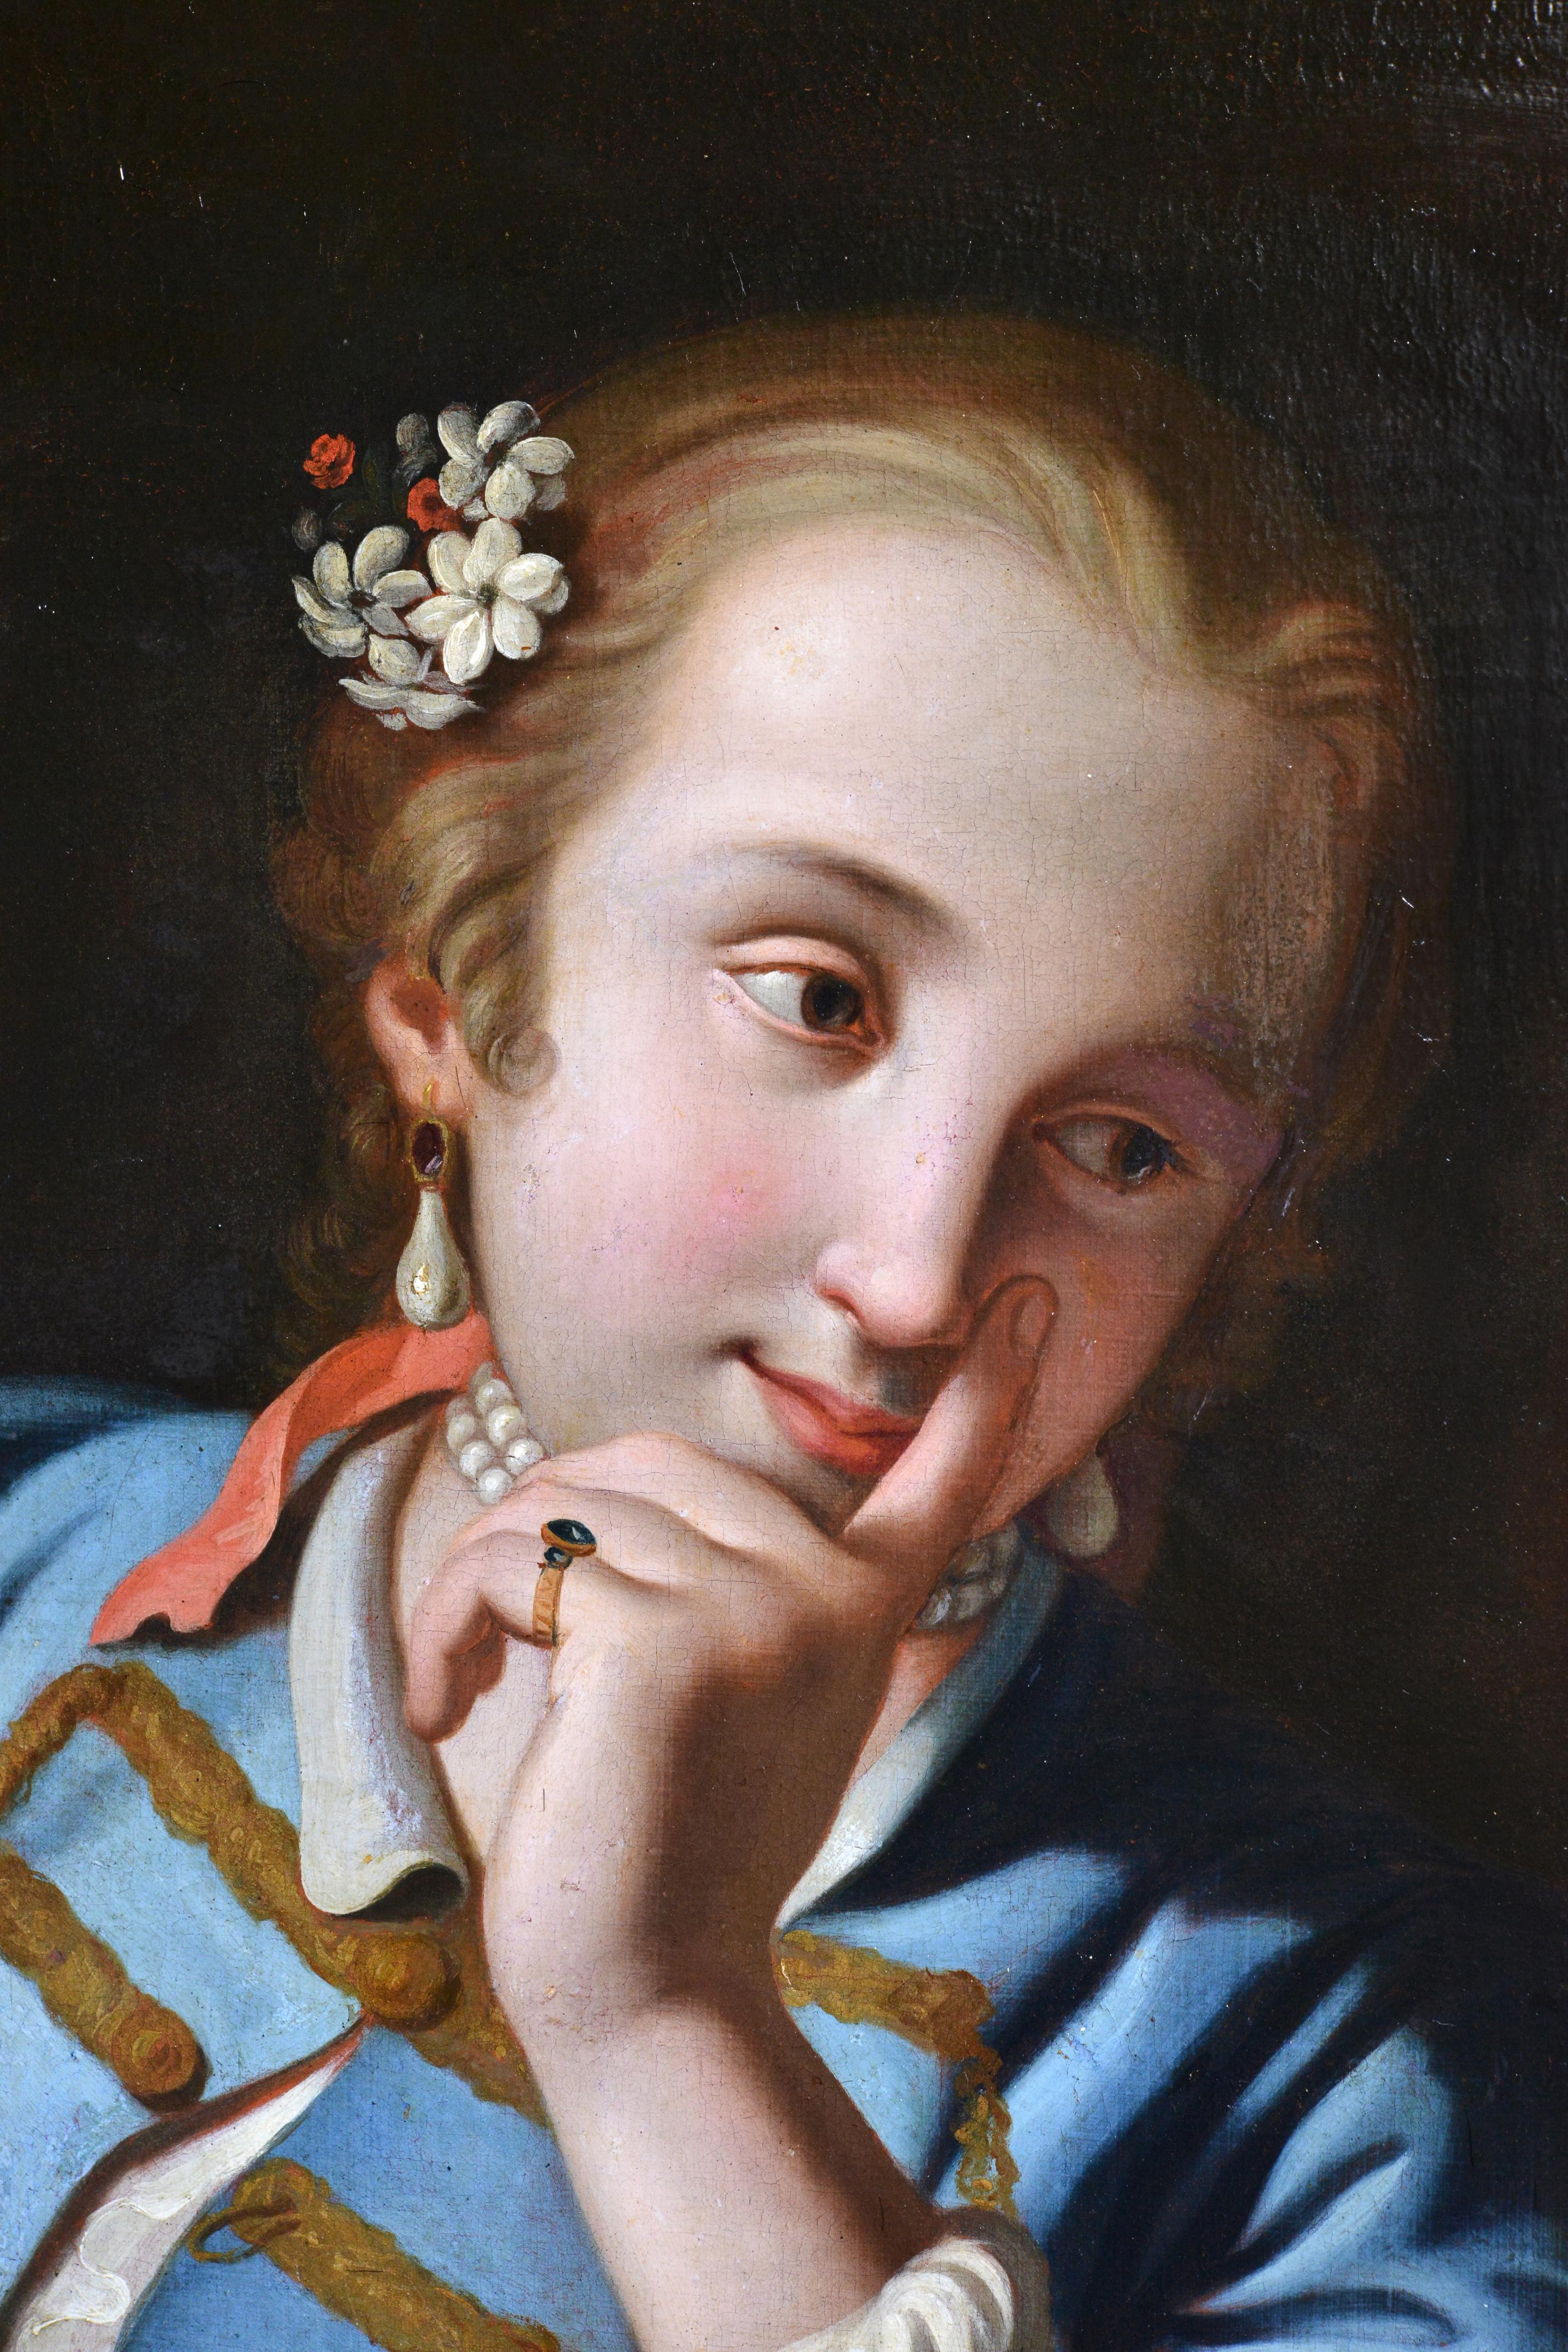 Portrait of Languid Girl in Blue Camisole 18th century Italian Rococo Master - Brown Portrait Painting by Pietro Antonio Rotari